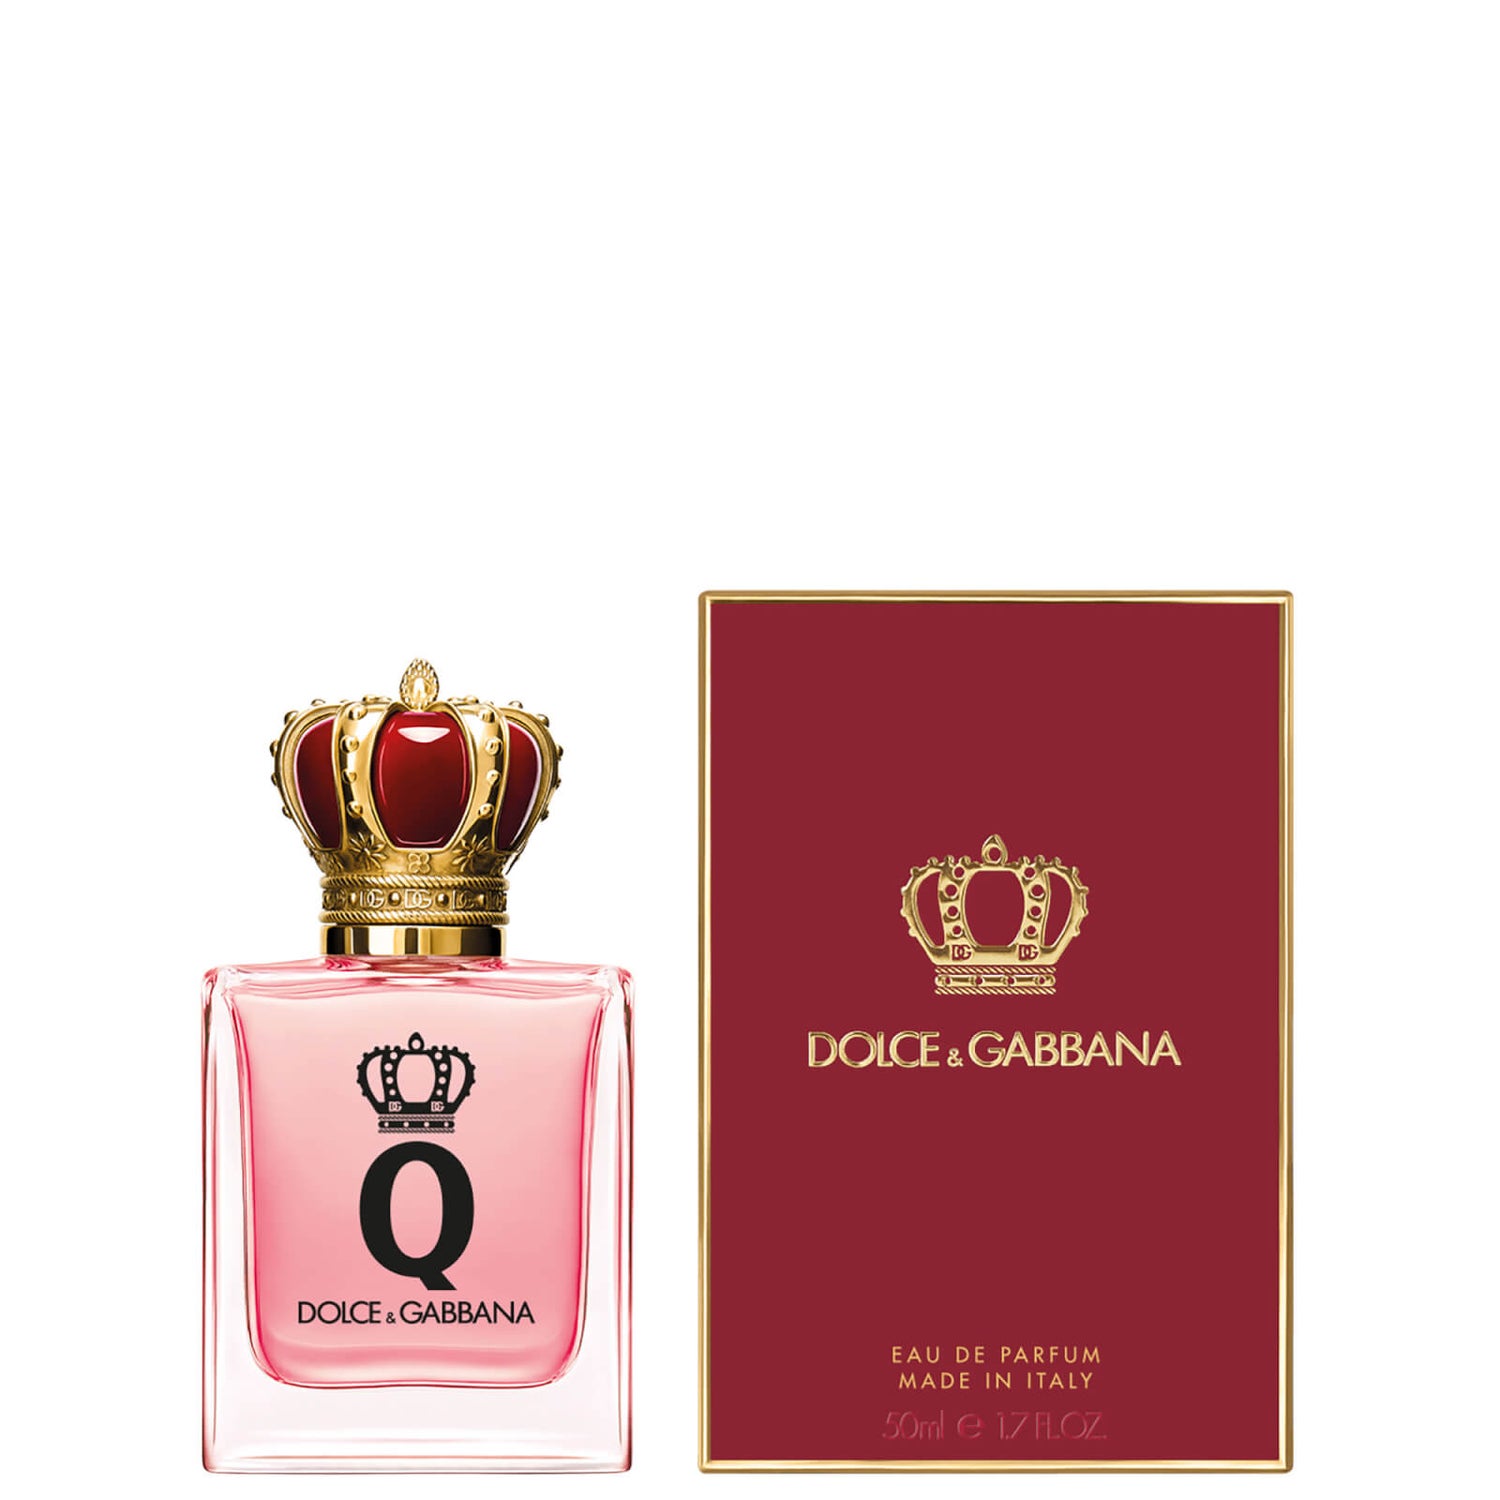 Dolce&Gabbana Q Eau de Parfum 50ml - LOOKFANTASTIC